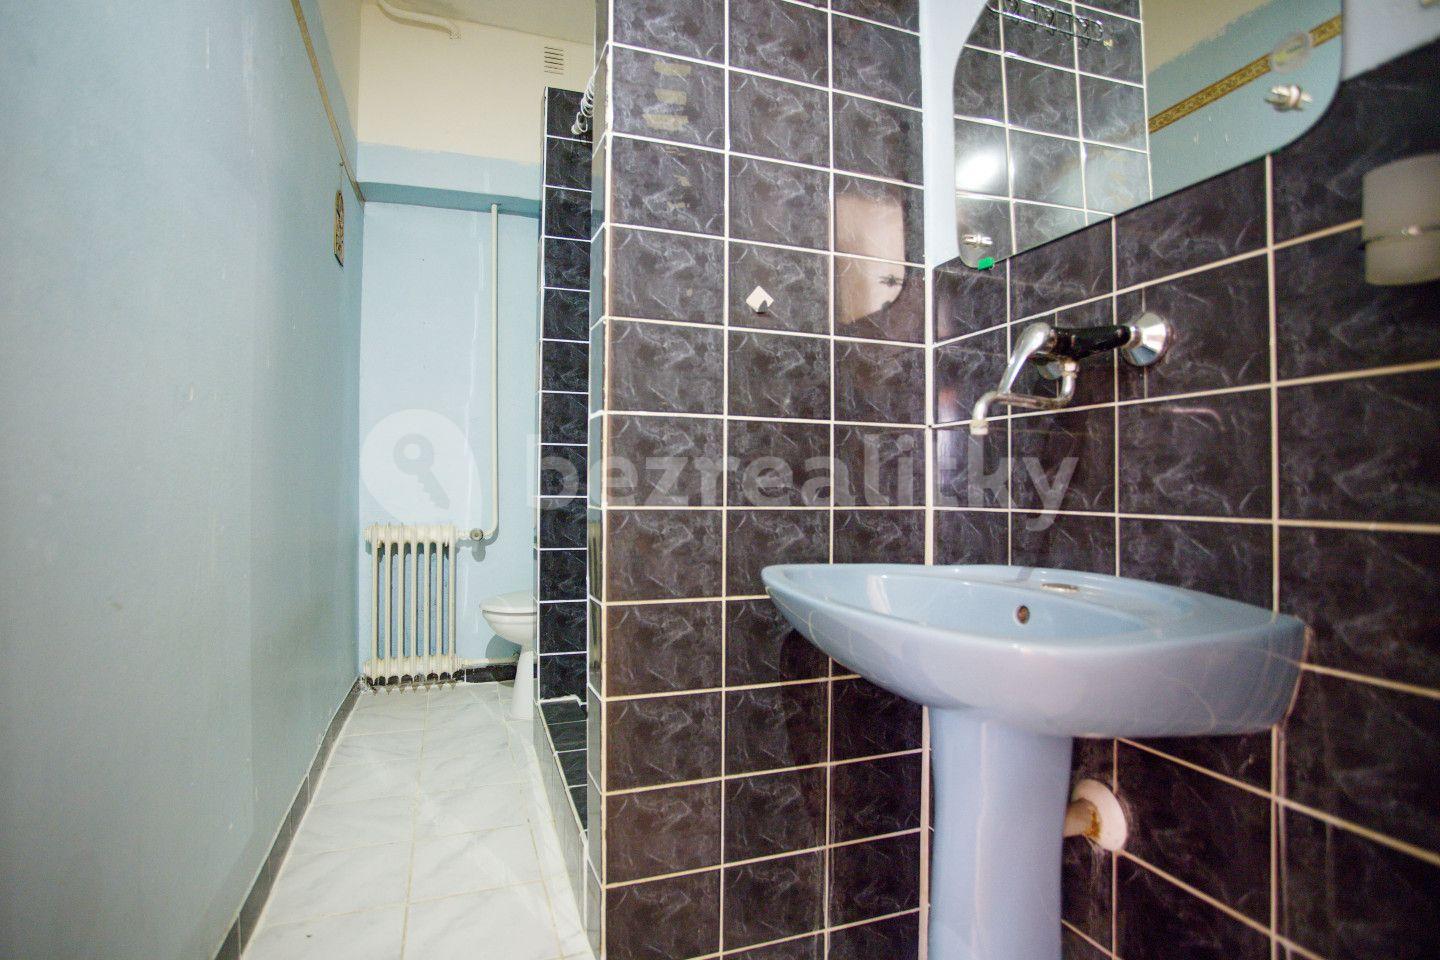 2 bedroom flat for sale, 52 m², Kolonie, Křešice, Ústecký Region